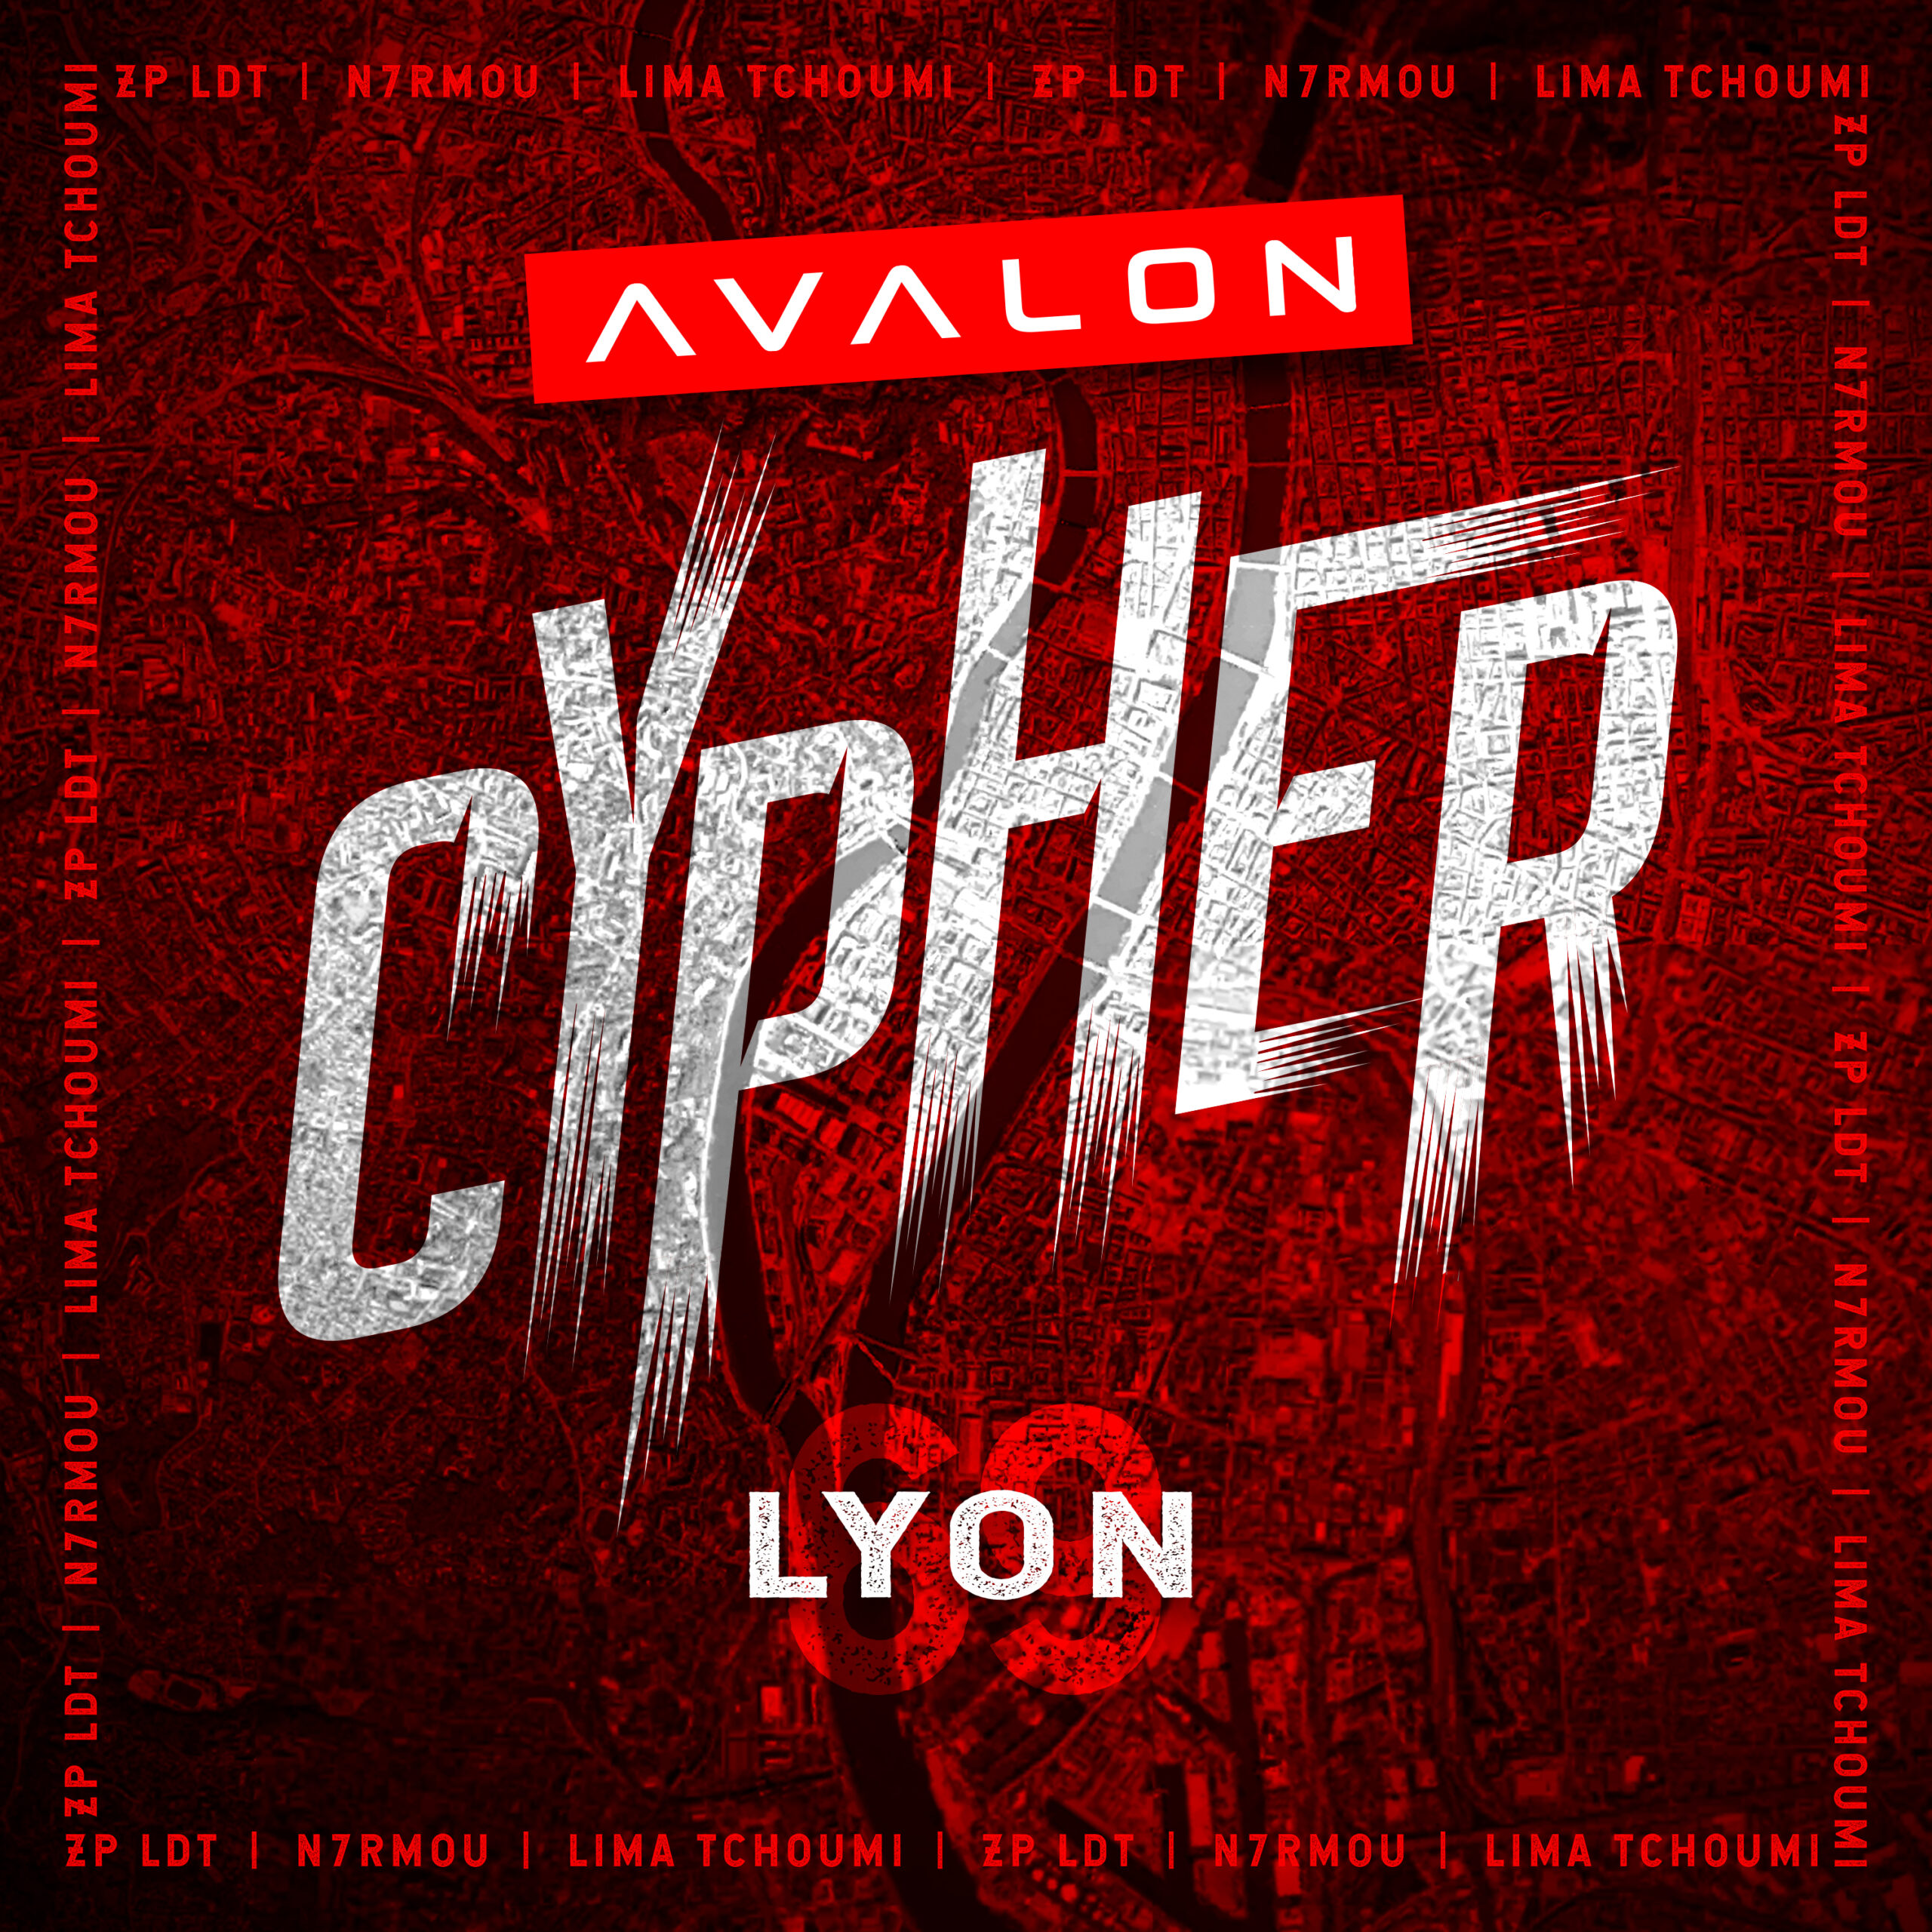 [OUT NOW] AVALON CYPHER – LYON 69